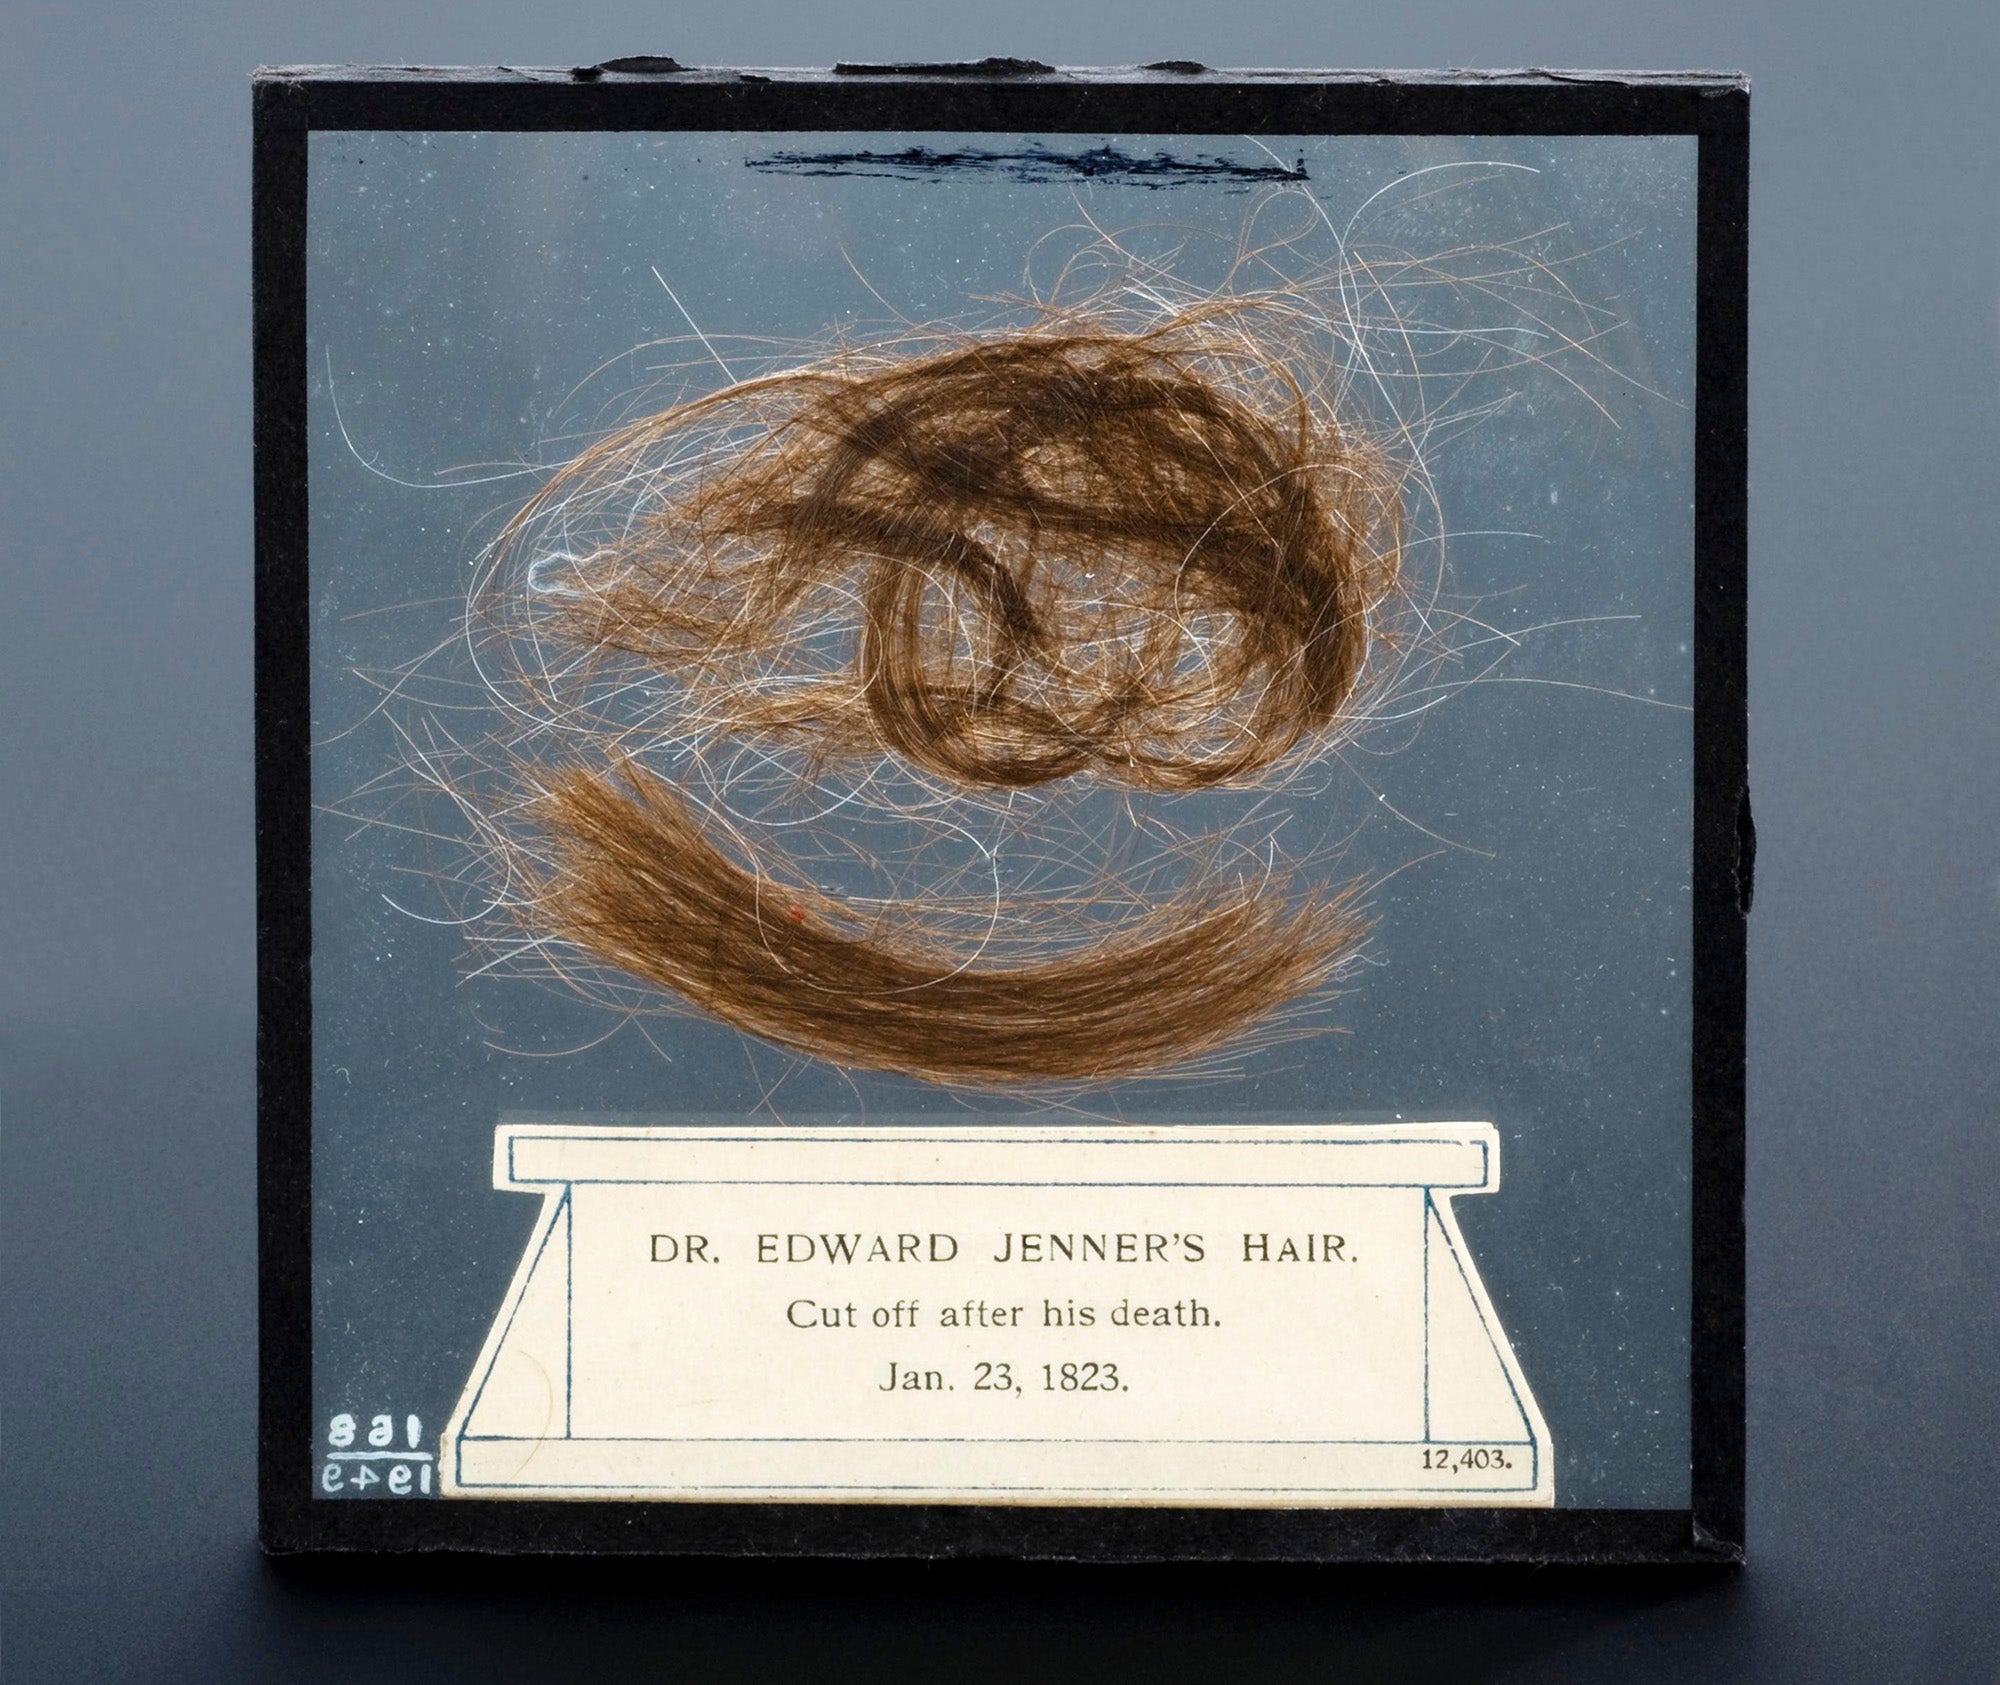 A sample of Edward Jenner's hair